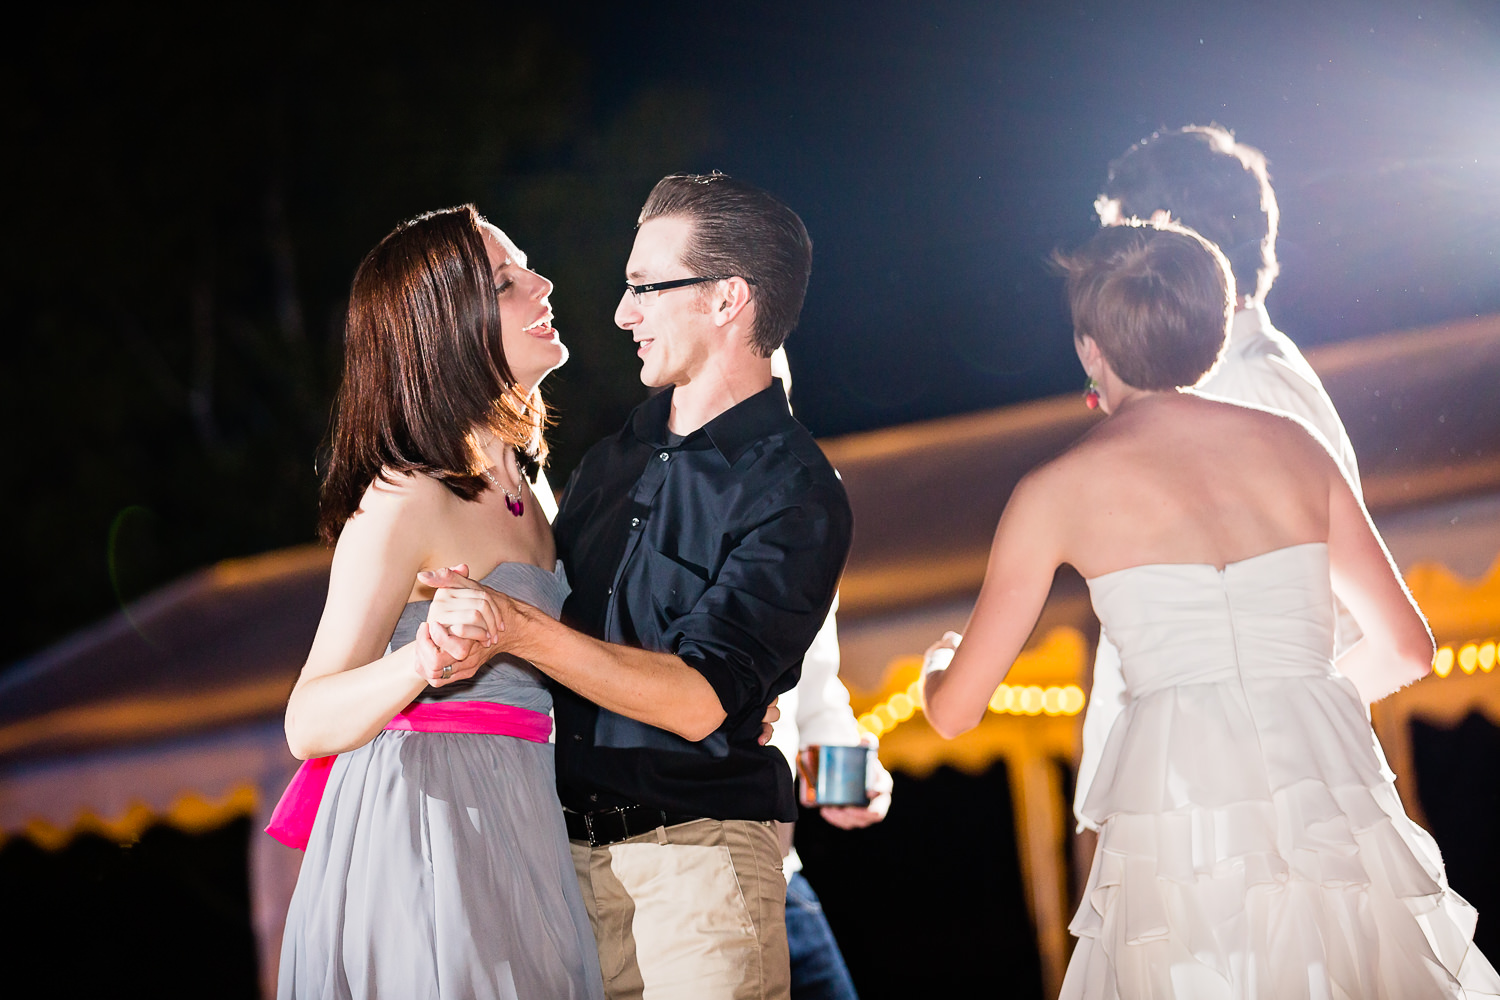 bozeman-montana-wedding-bridesmaid-dances-with-husband.jpg